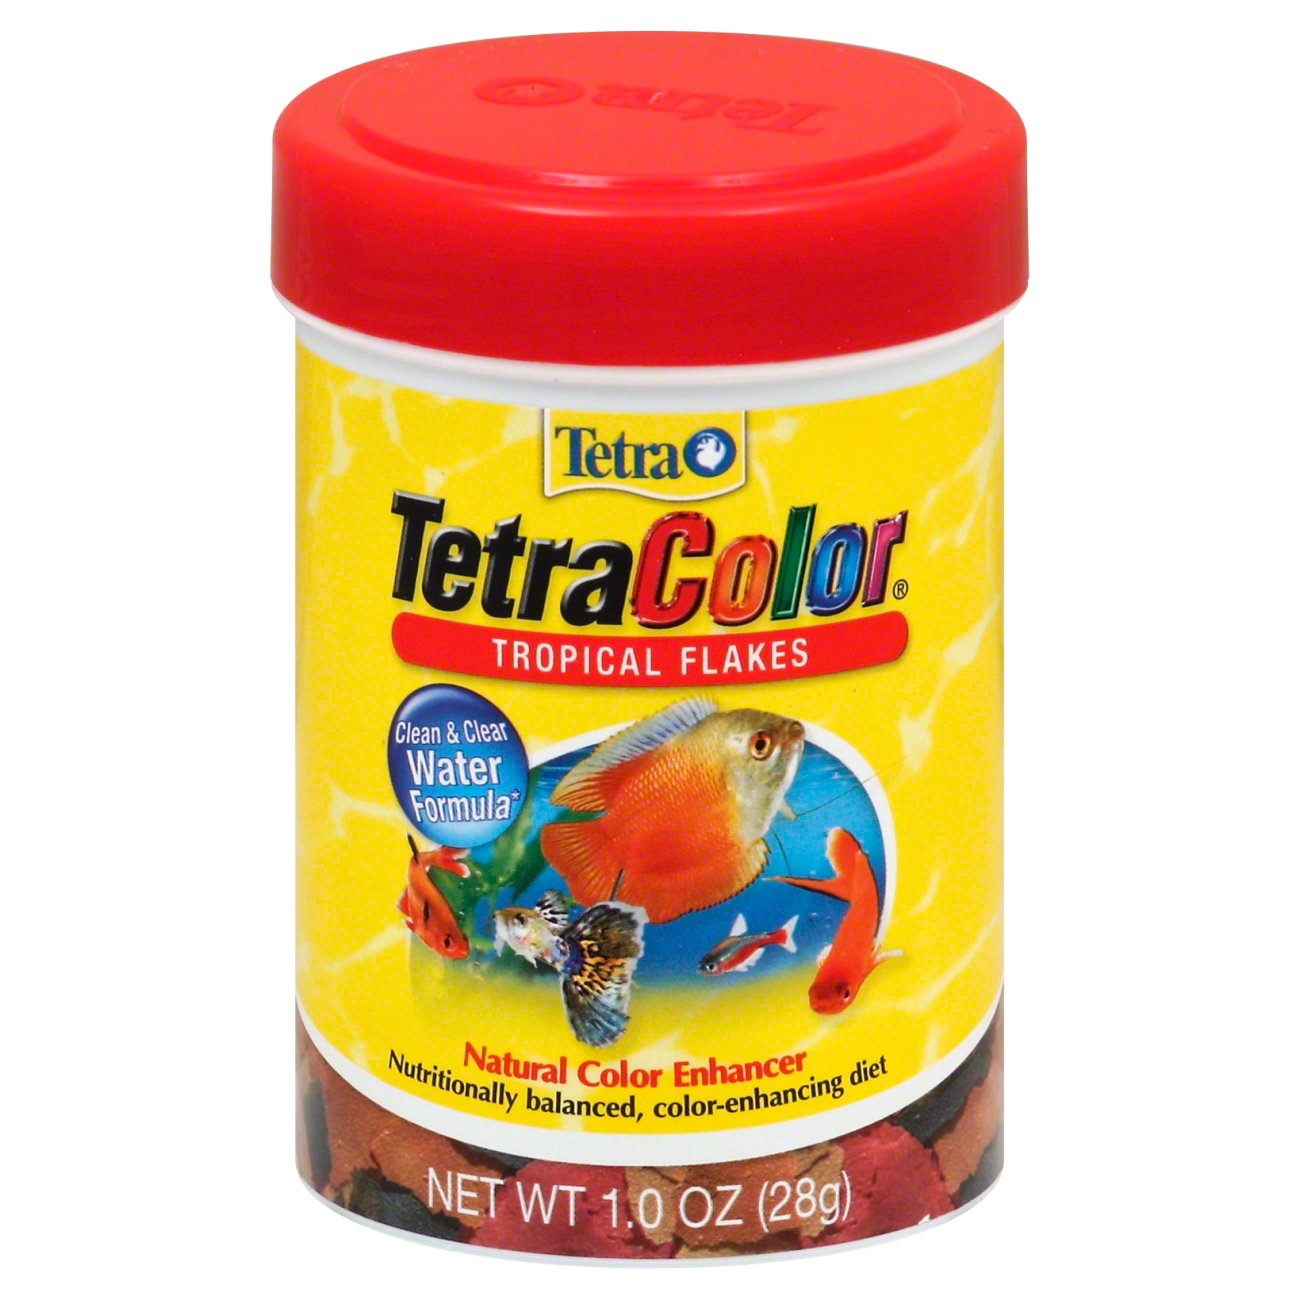 Tetra Color Tropical Flakes Natural Color Enhancer - Shop Fish at